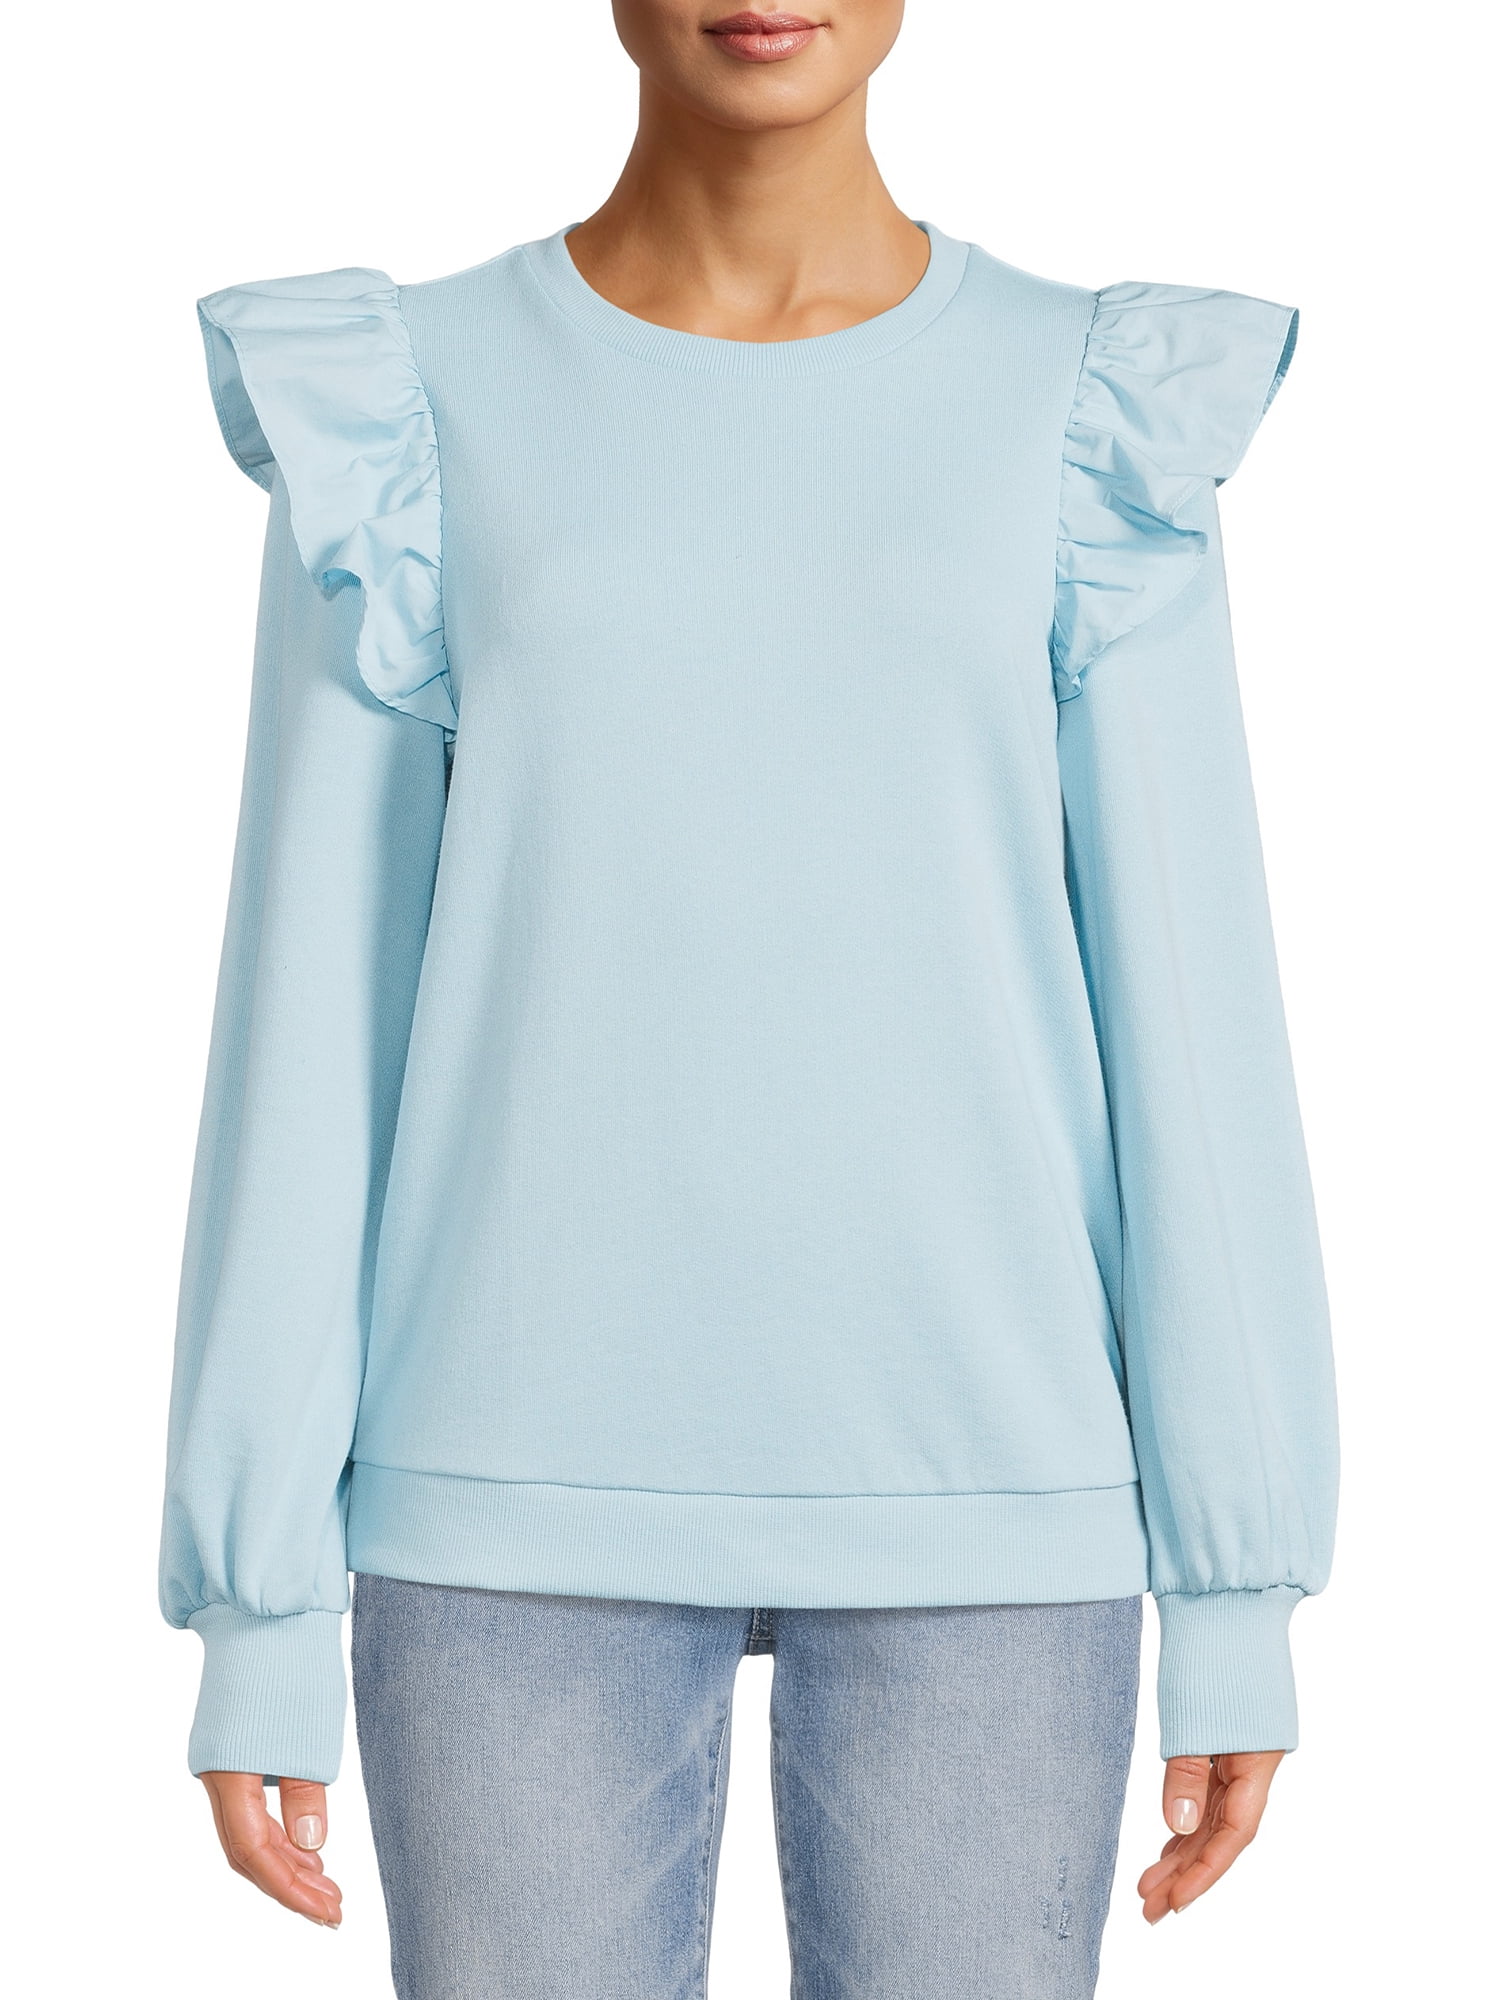 YUNY Women Split Long Sleeve Stitching Pullover Fall Winter T-Shirt Top Black M